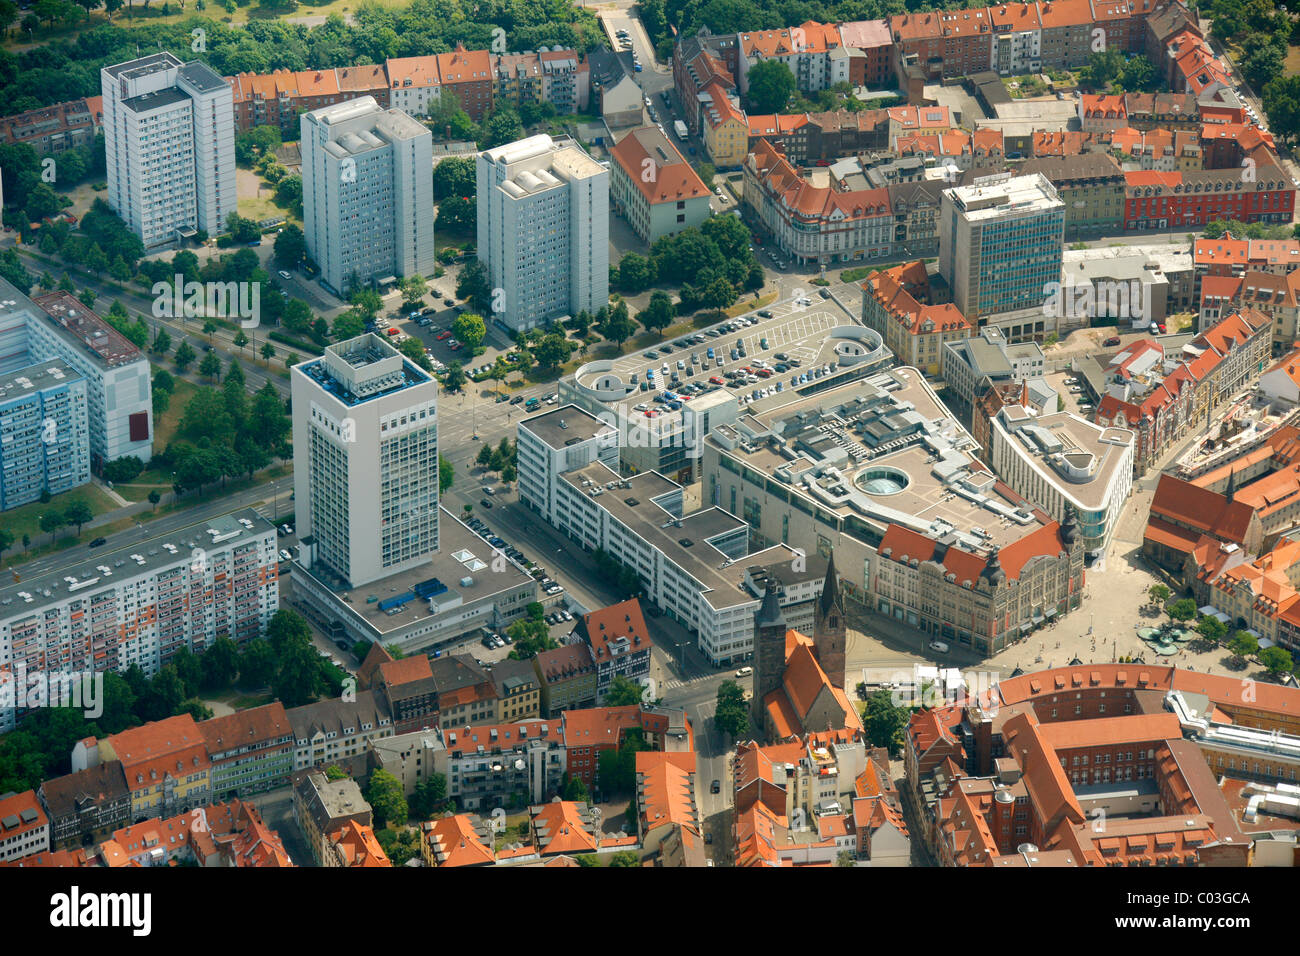 Vista aerea, Ira 1 shopping, centro citta', Erfurt, Turingia, Germania, Europa Foto Stock